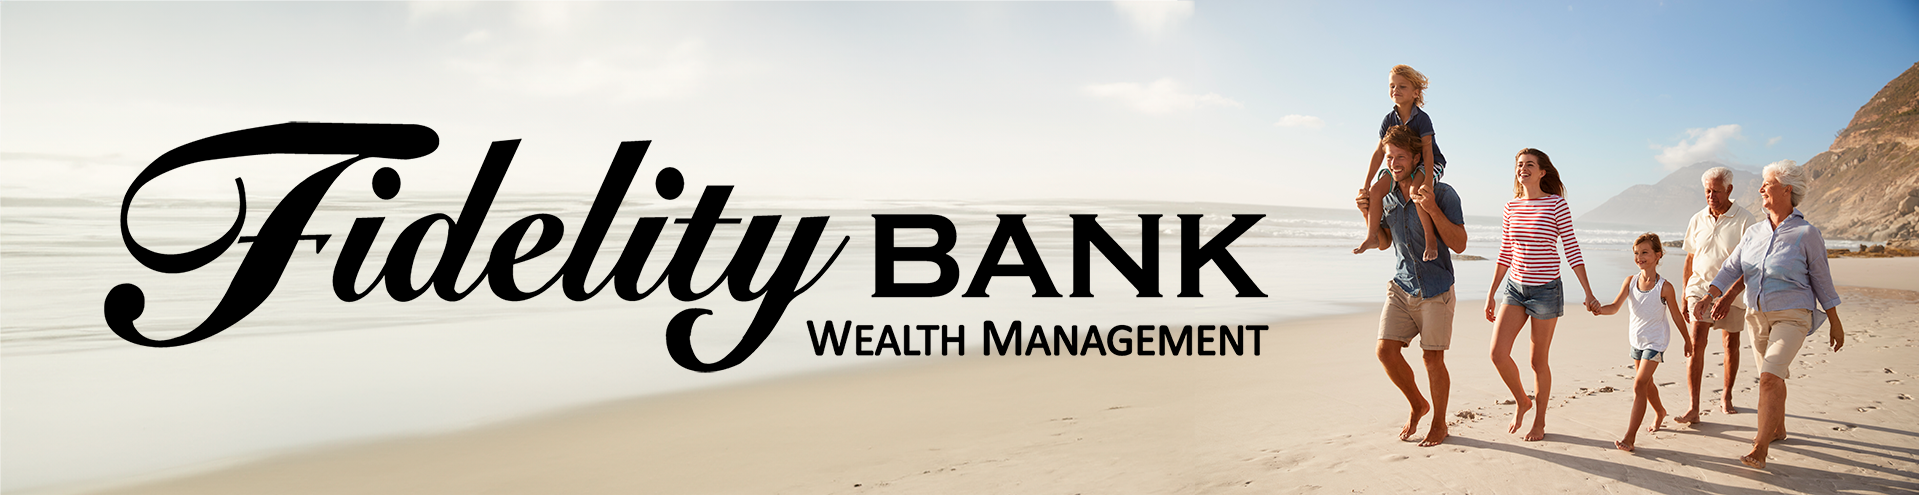 Fidelity Bank Wealth Management.